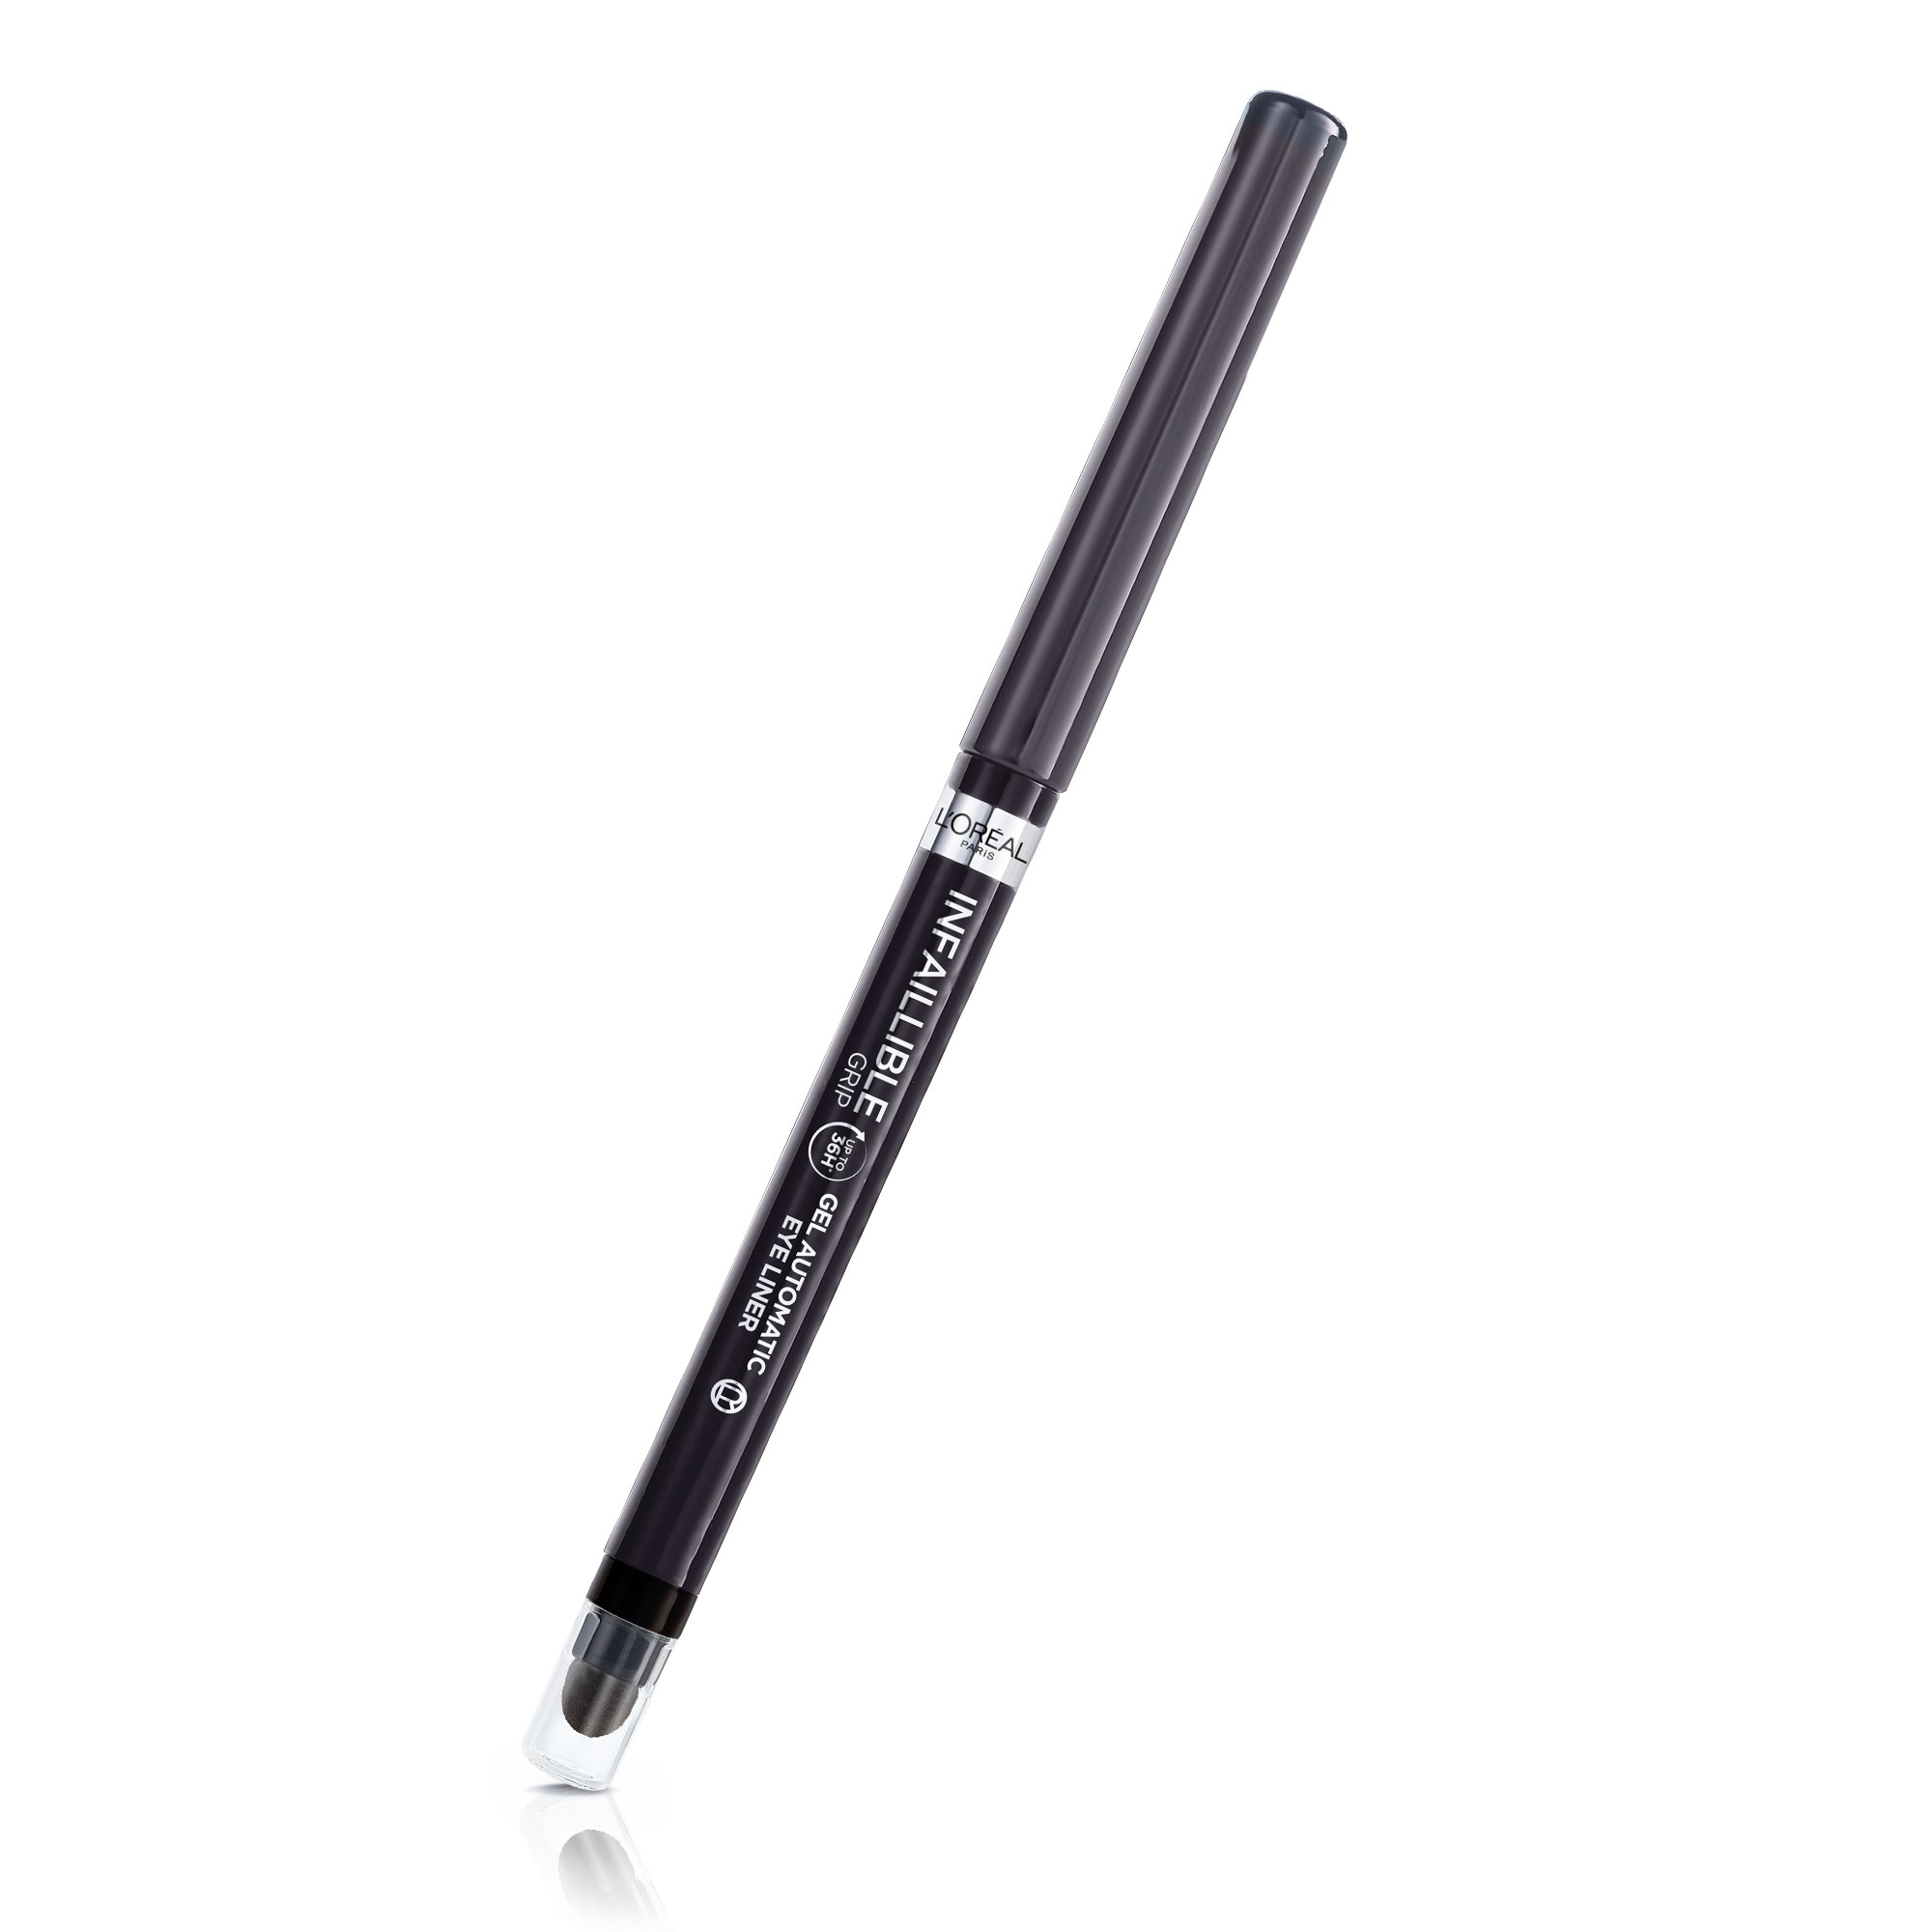 Creion mecanic pentru ochi tip gel Infaillible 36H Grip, Taupe Grey, 1.2 g, Loreal Paris